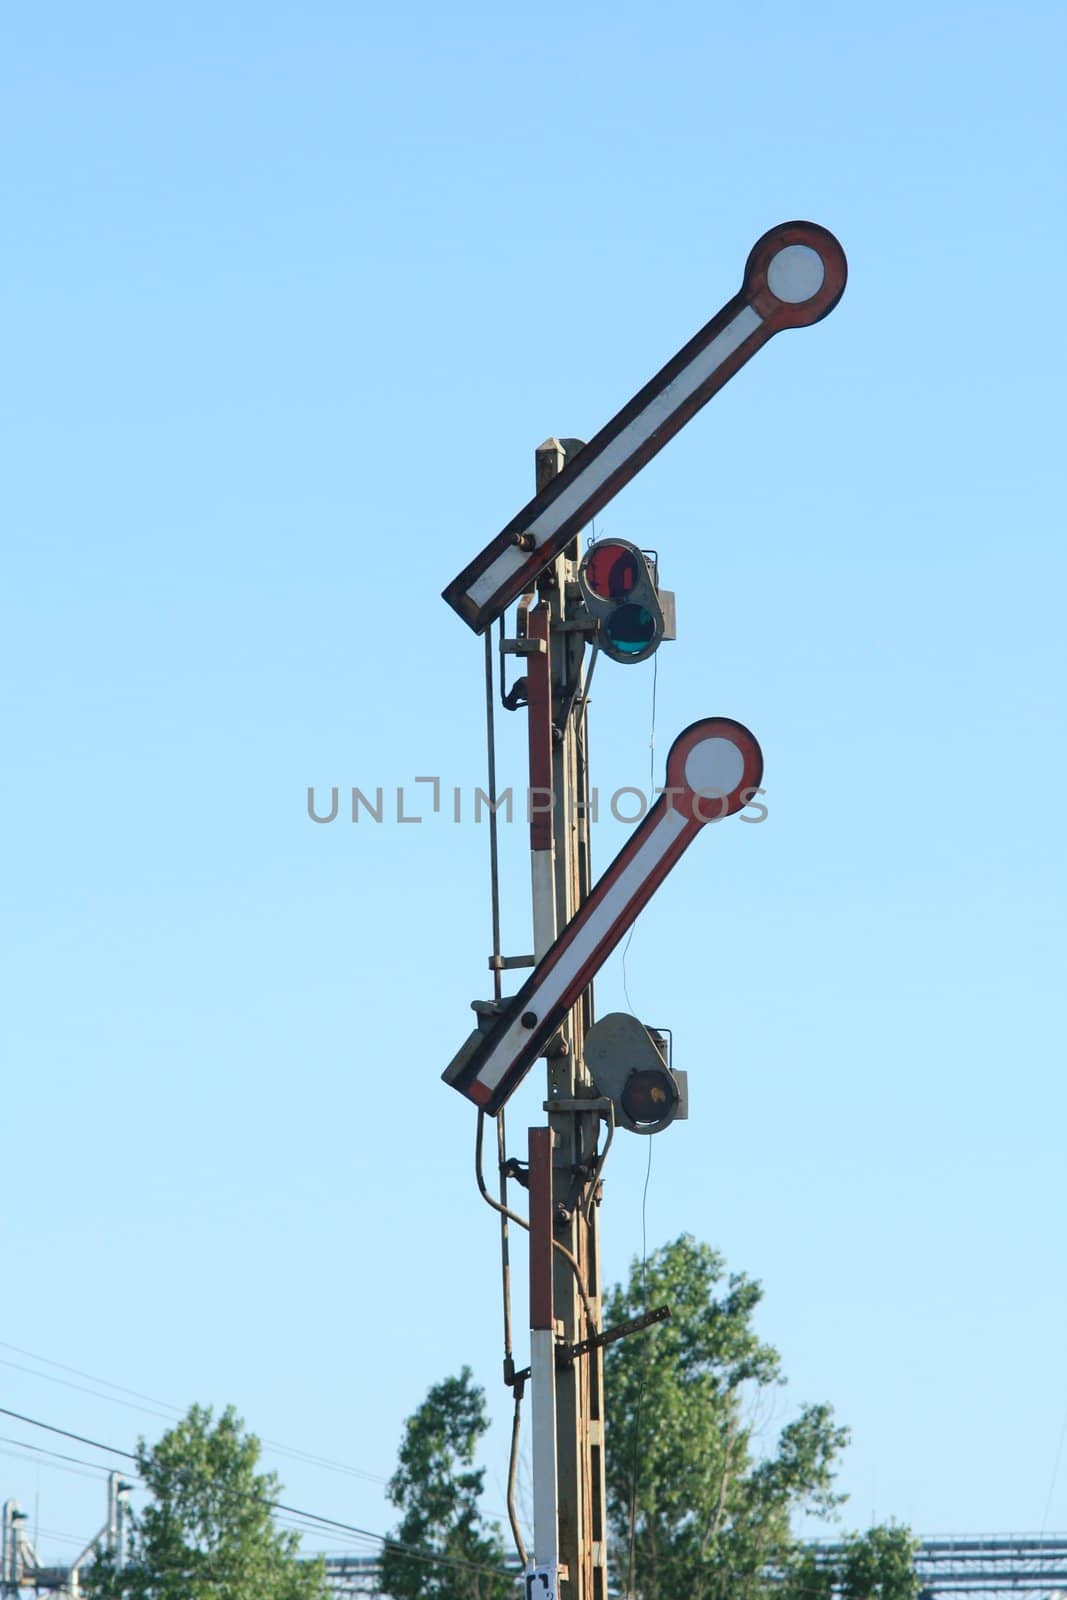 Old railway mechanical semaphore on the blue background